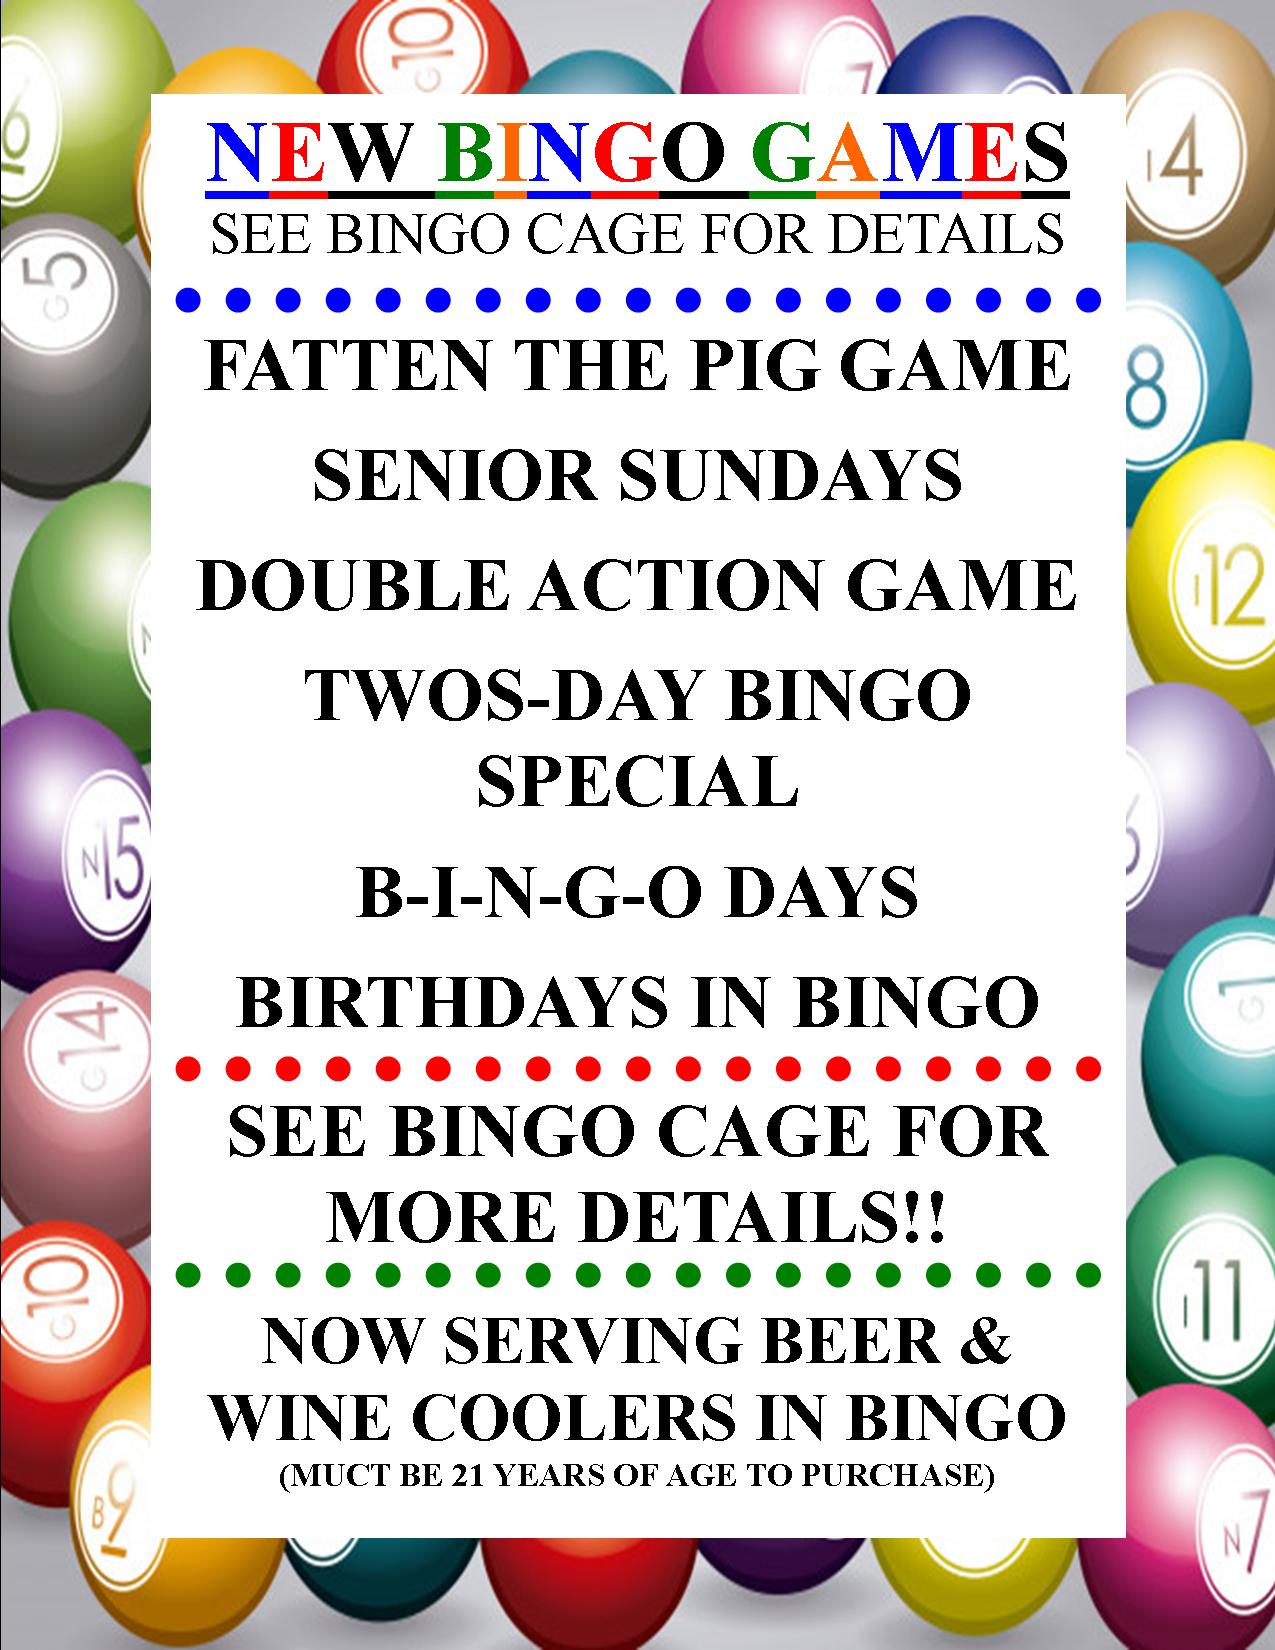 Progressive jackpot bingo games